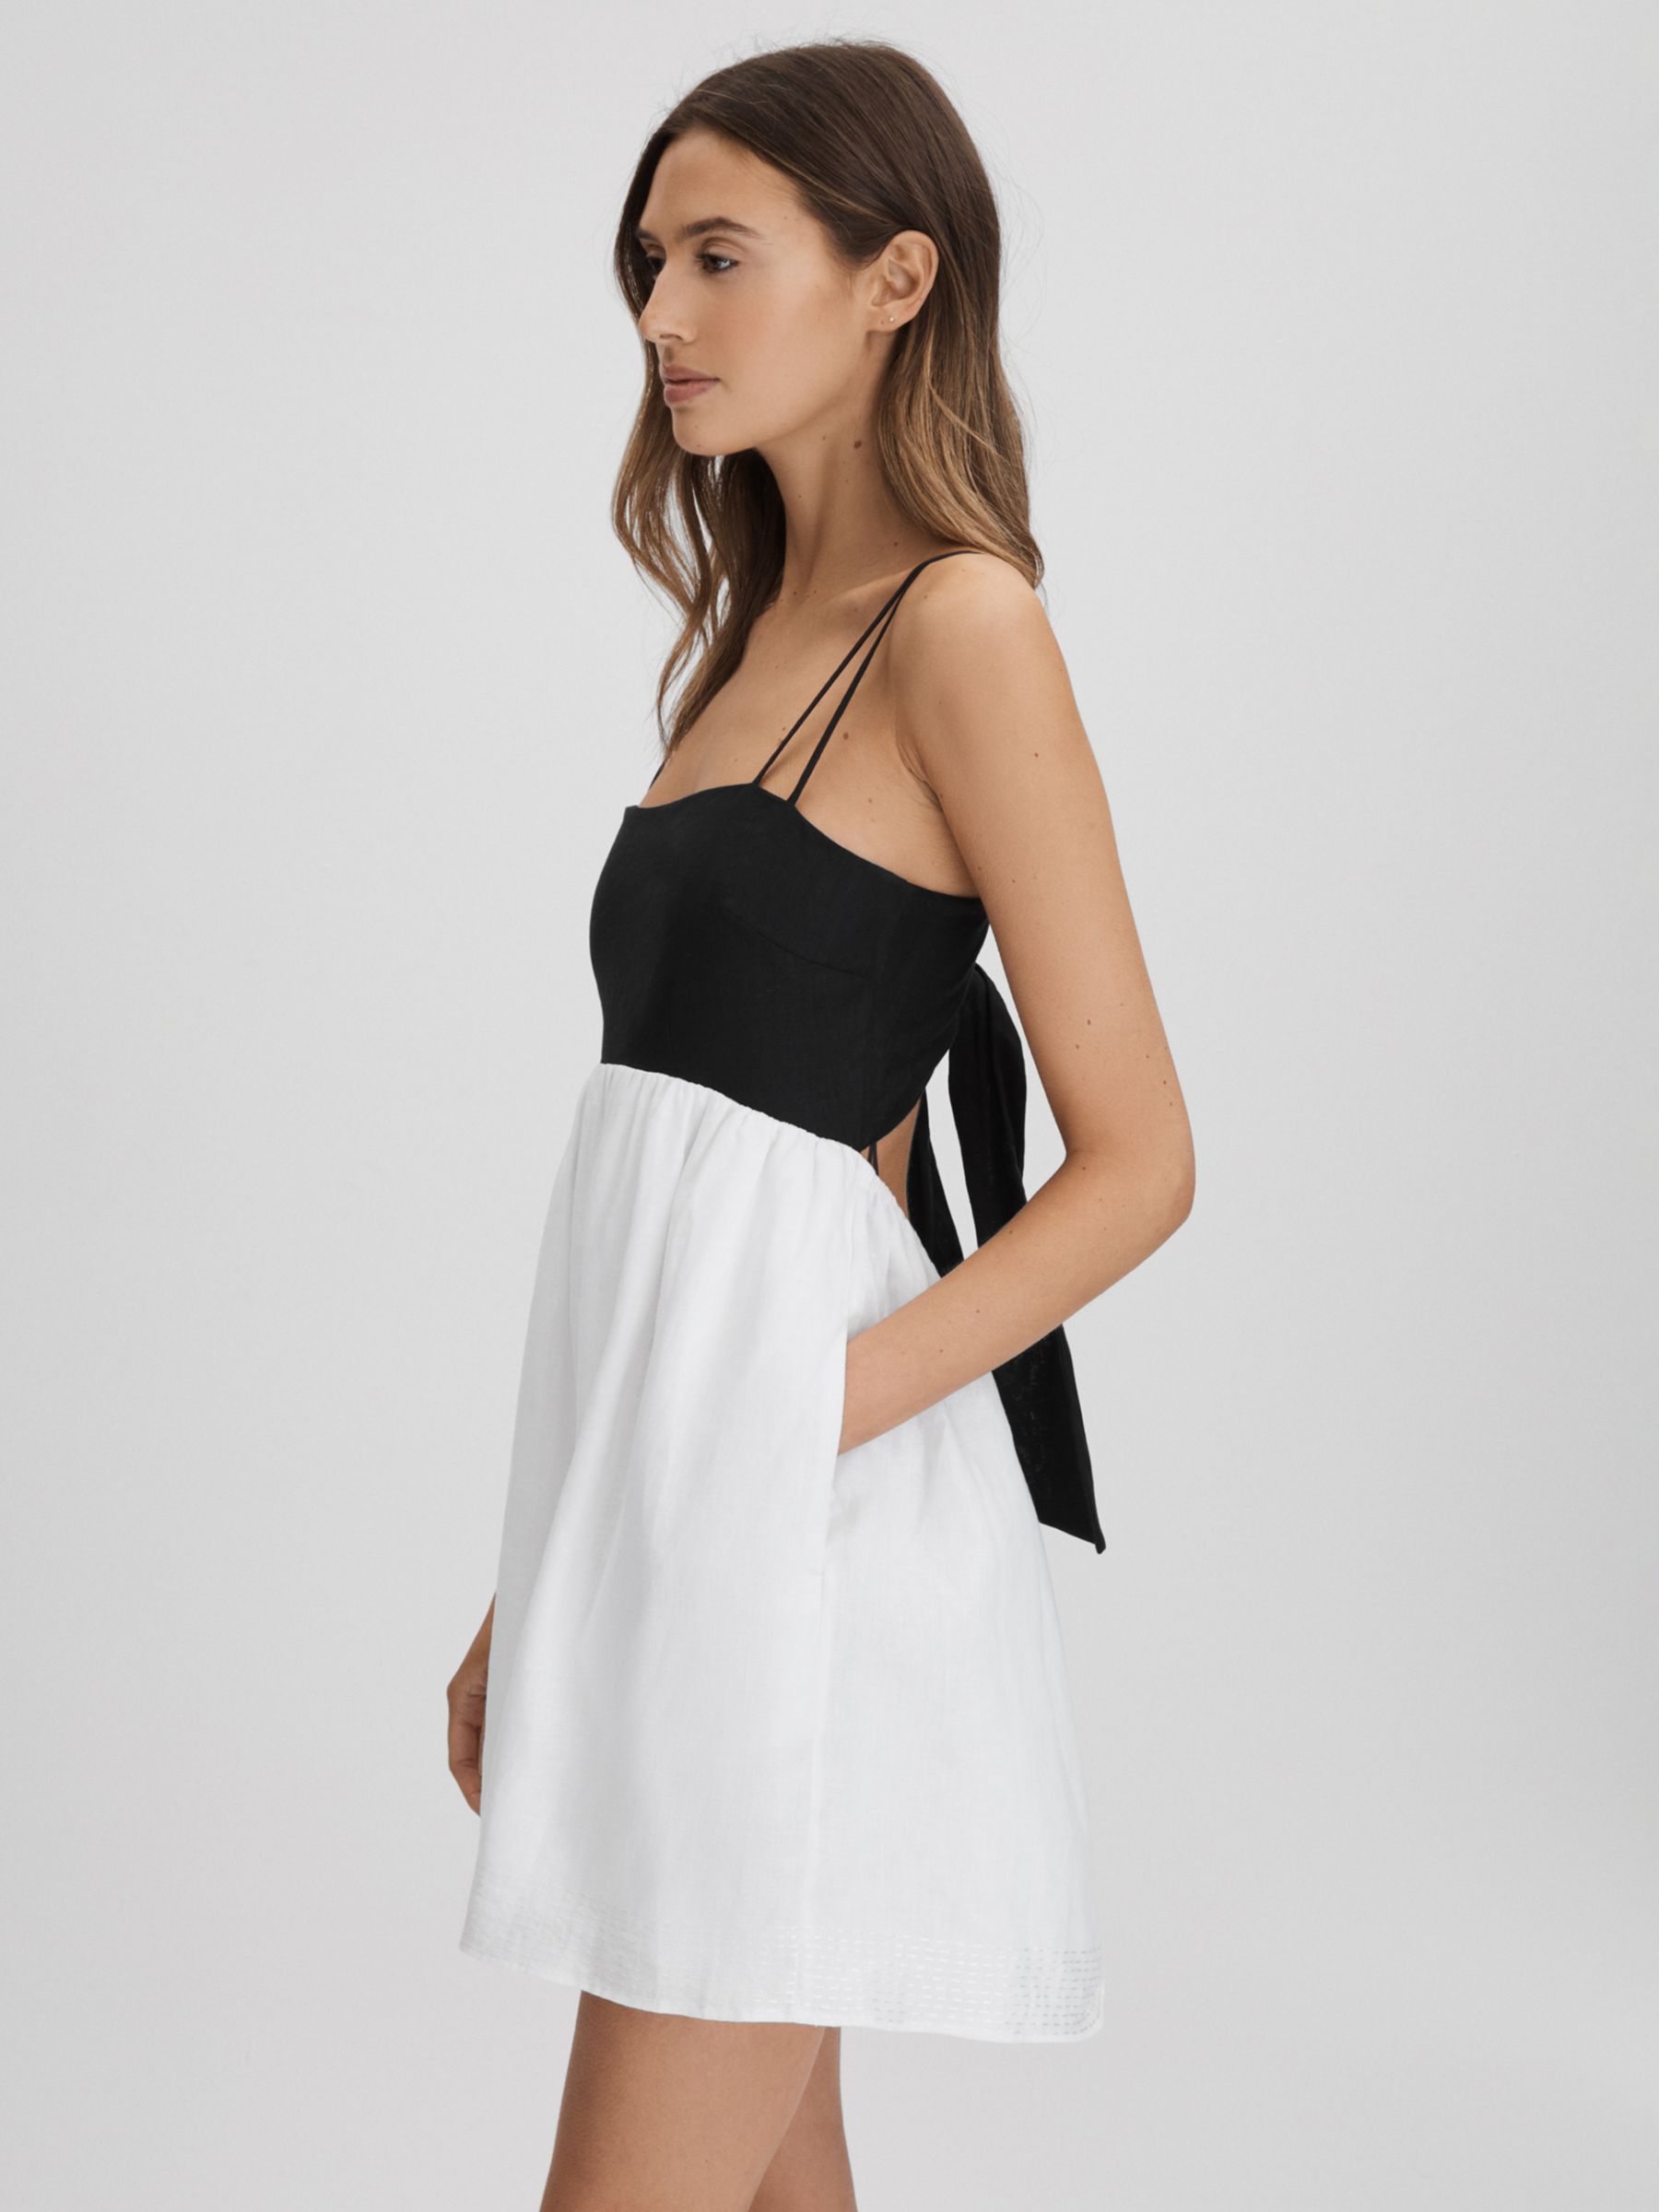 Reiss Hadley Linen Colour Block Mini Dress, Black/White, 6